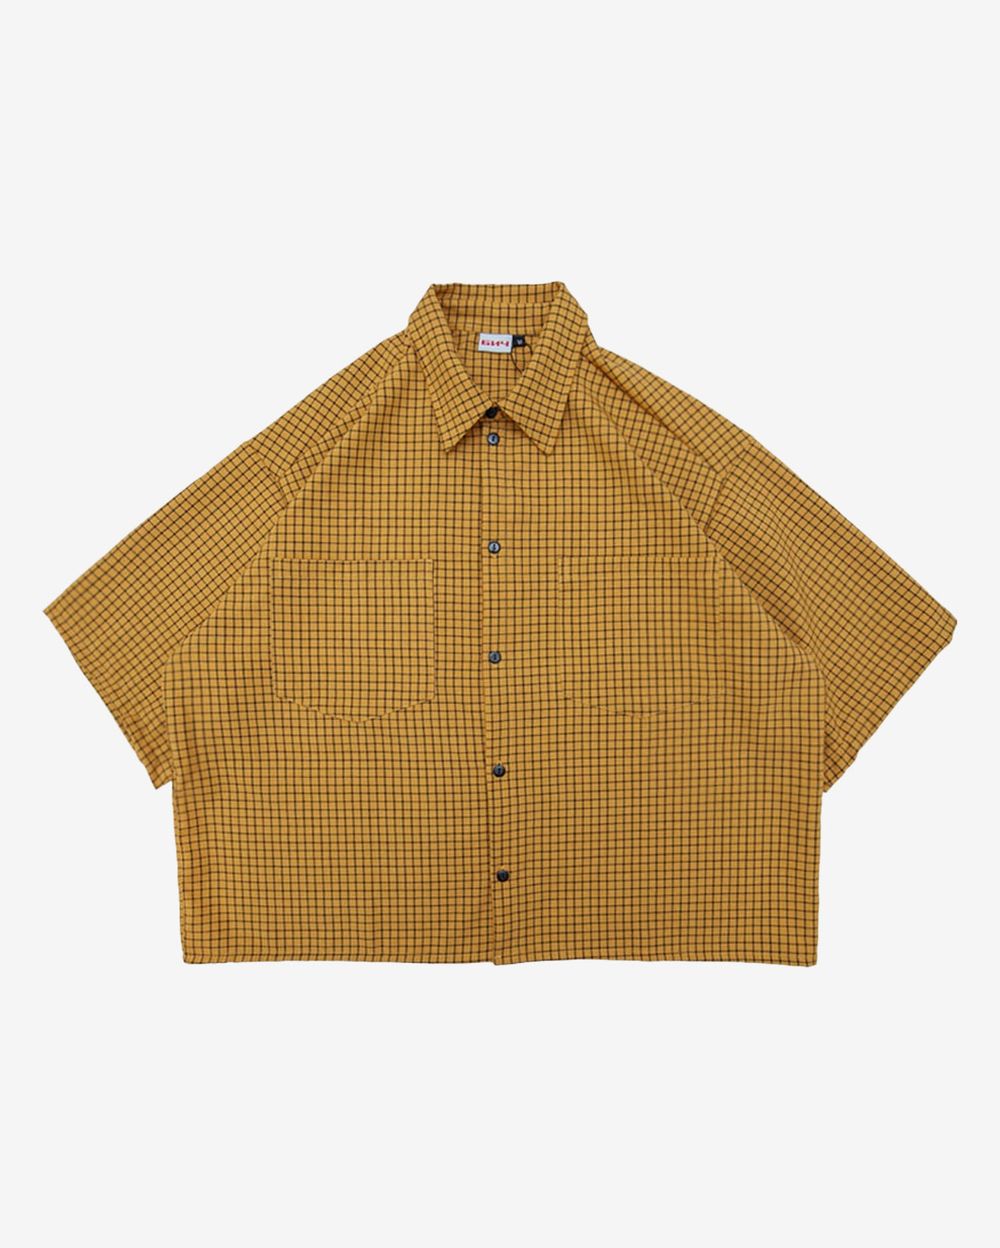 Рубашка БИЧ укороченная оверсайз желтая